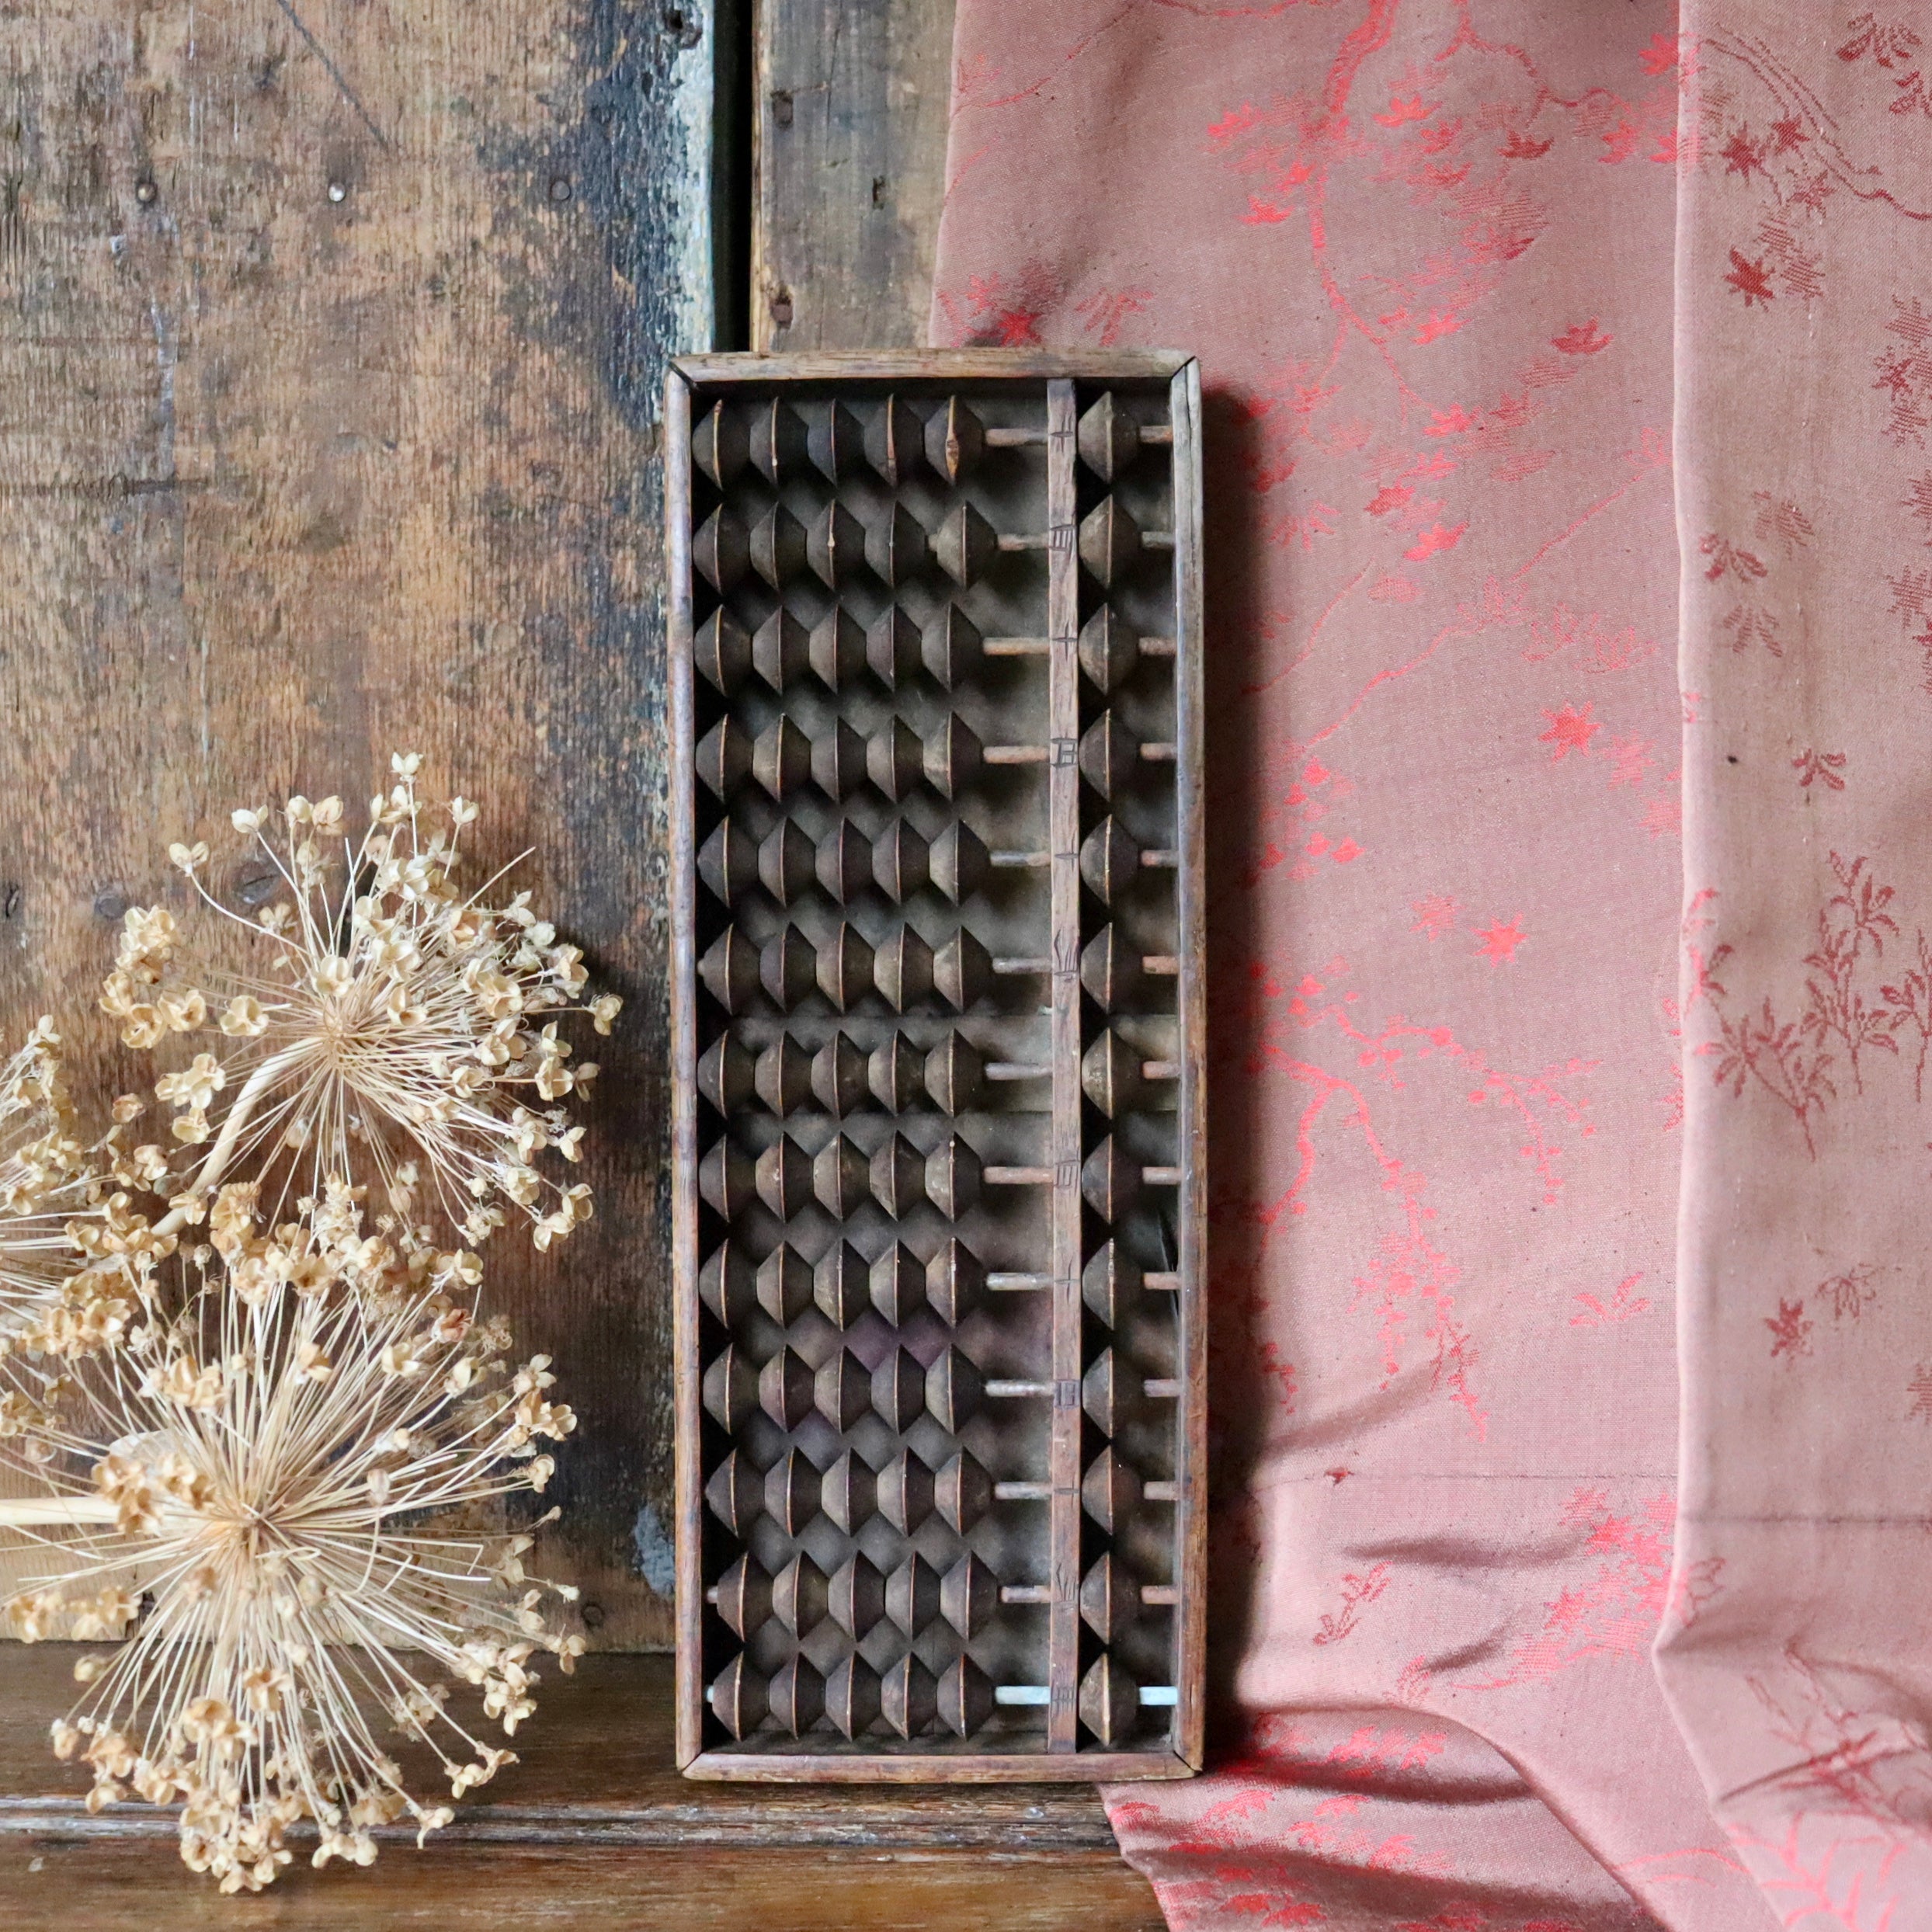 Japanese Wooden Soroban Abacus